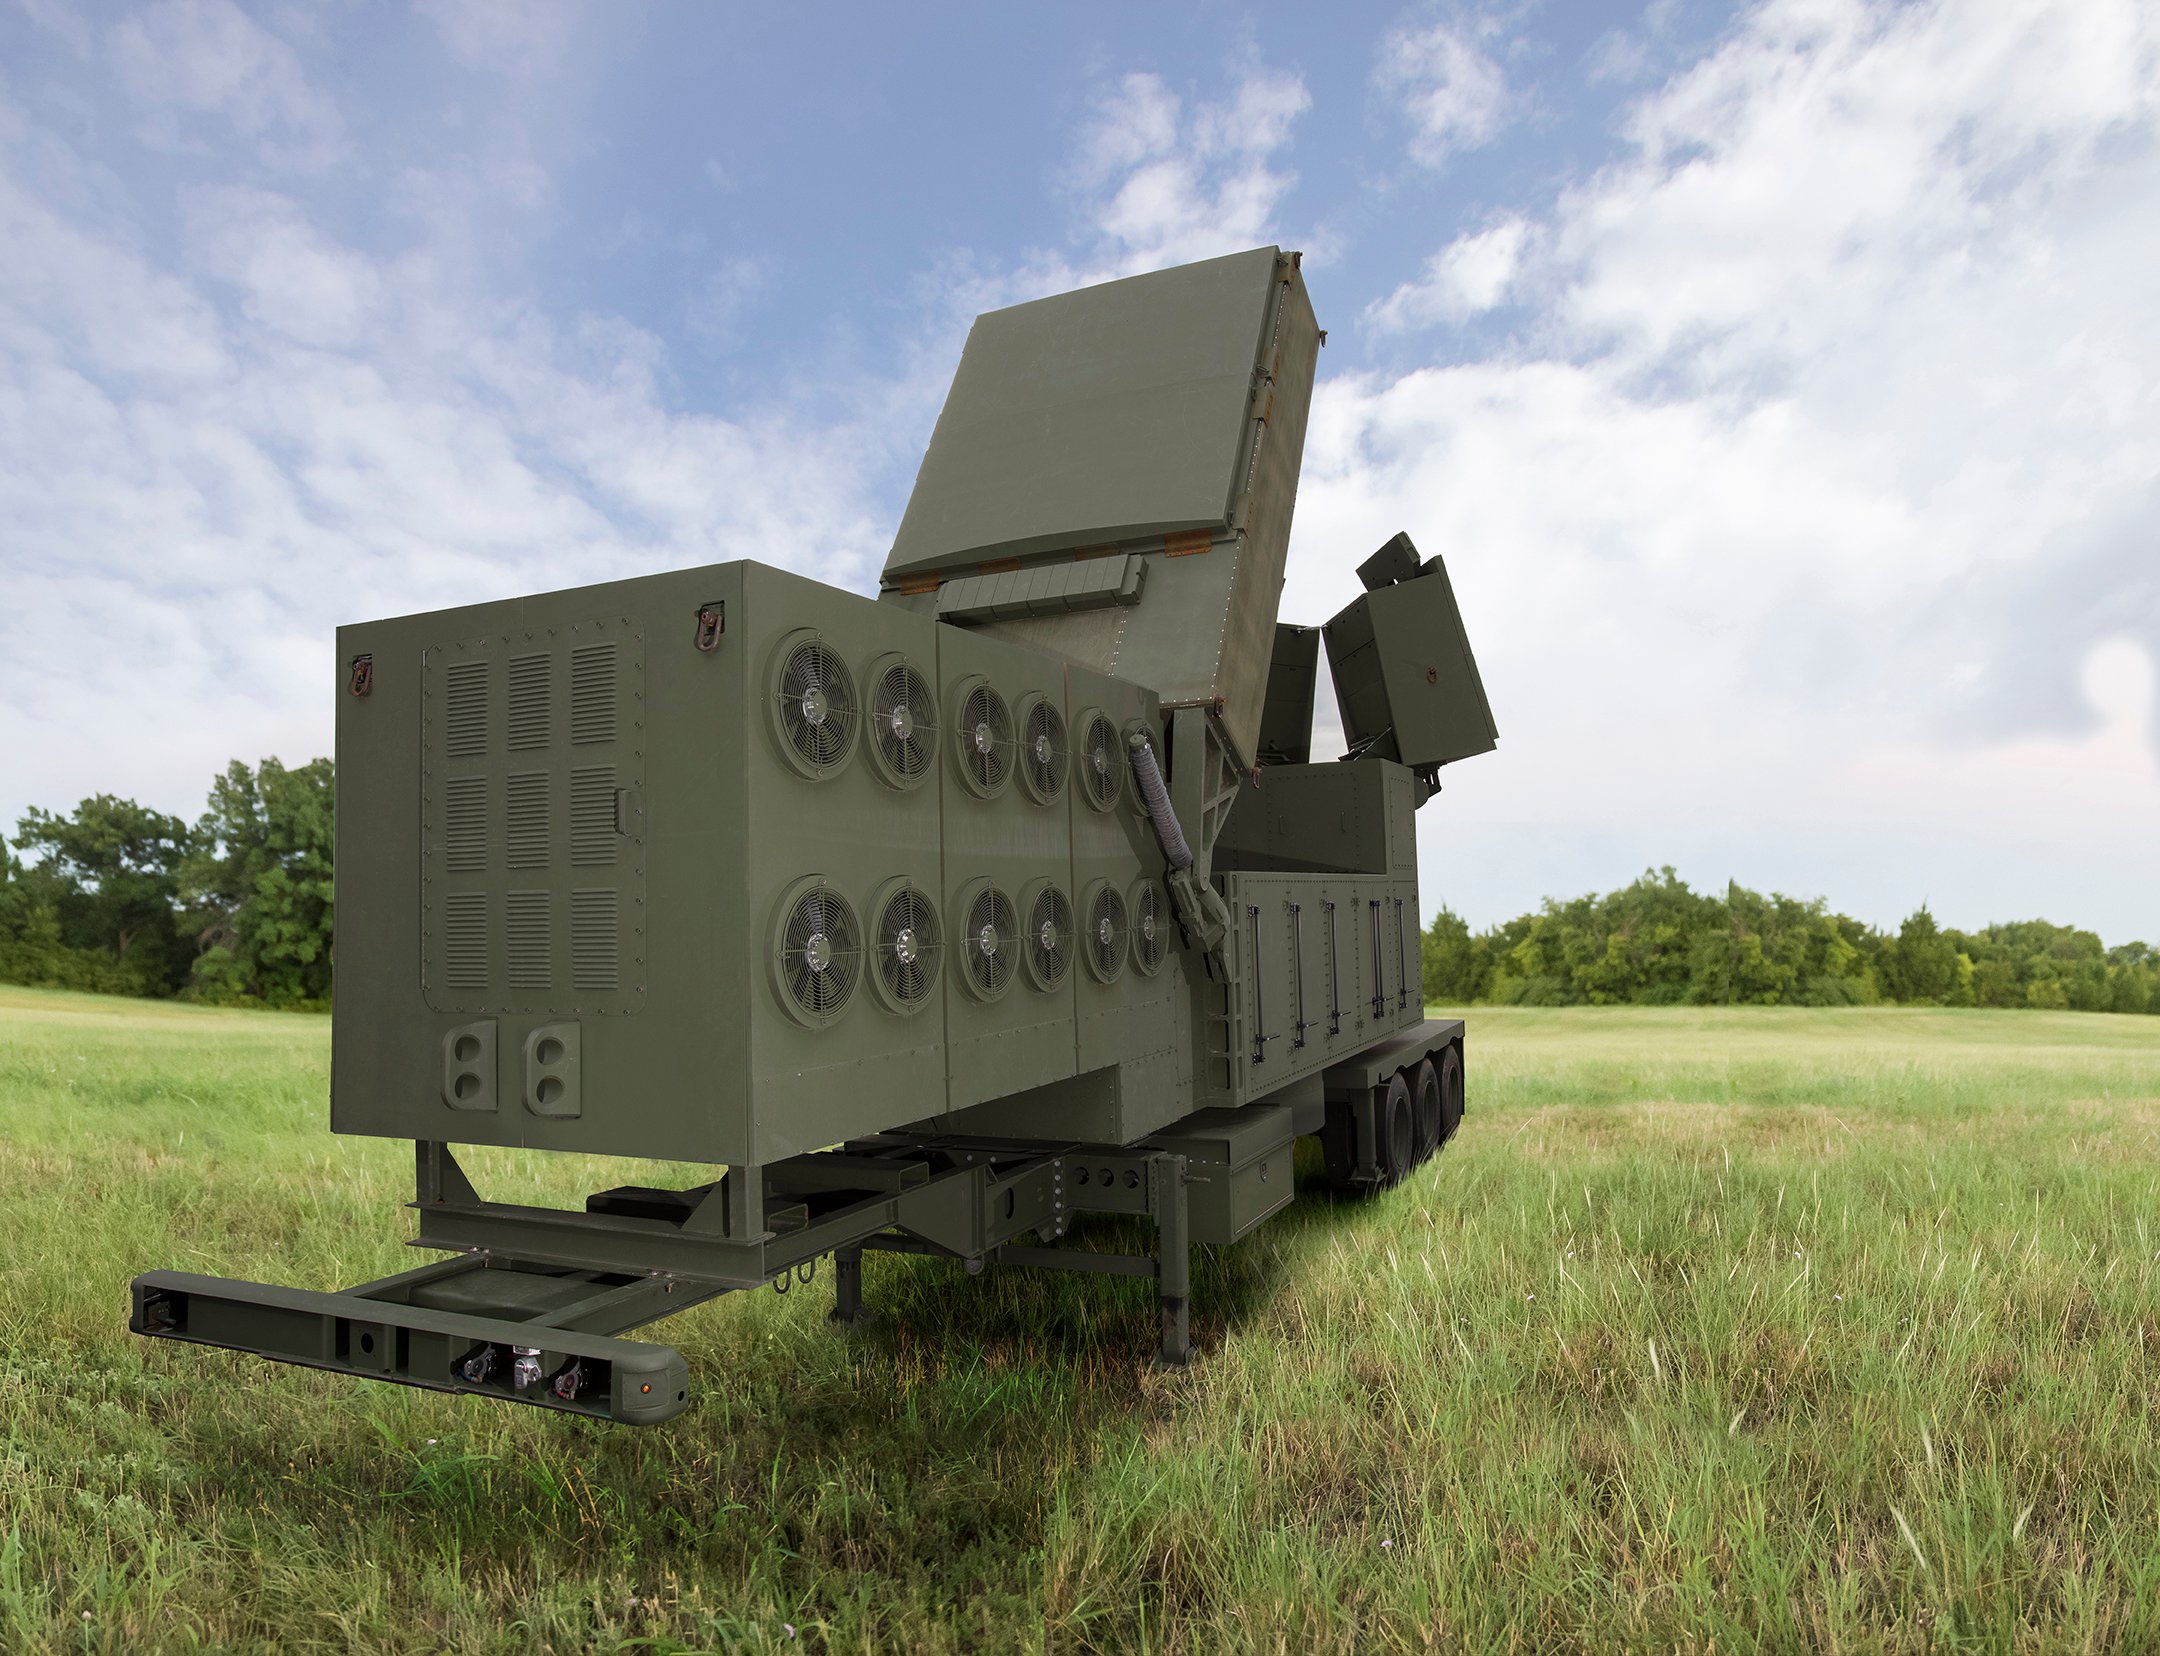 The-Lower-Tier-Air-and-Missile-Defense-Sensor-radar-can-sense-in-360-degrees-.jpg